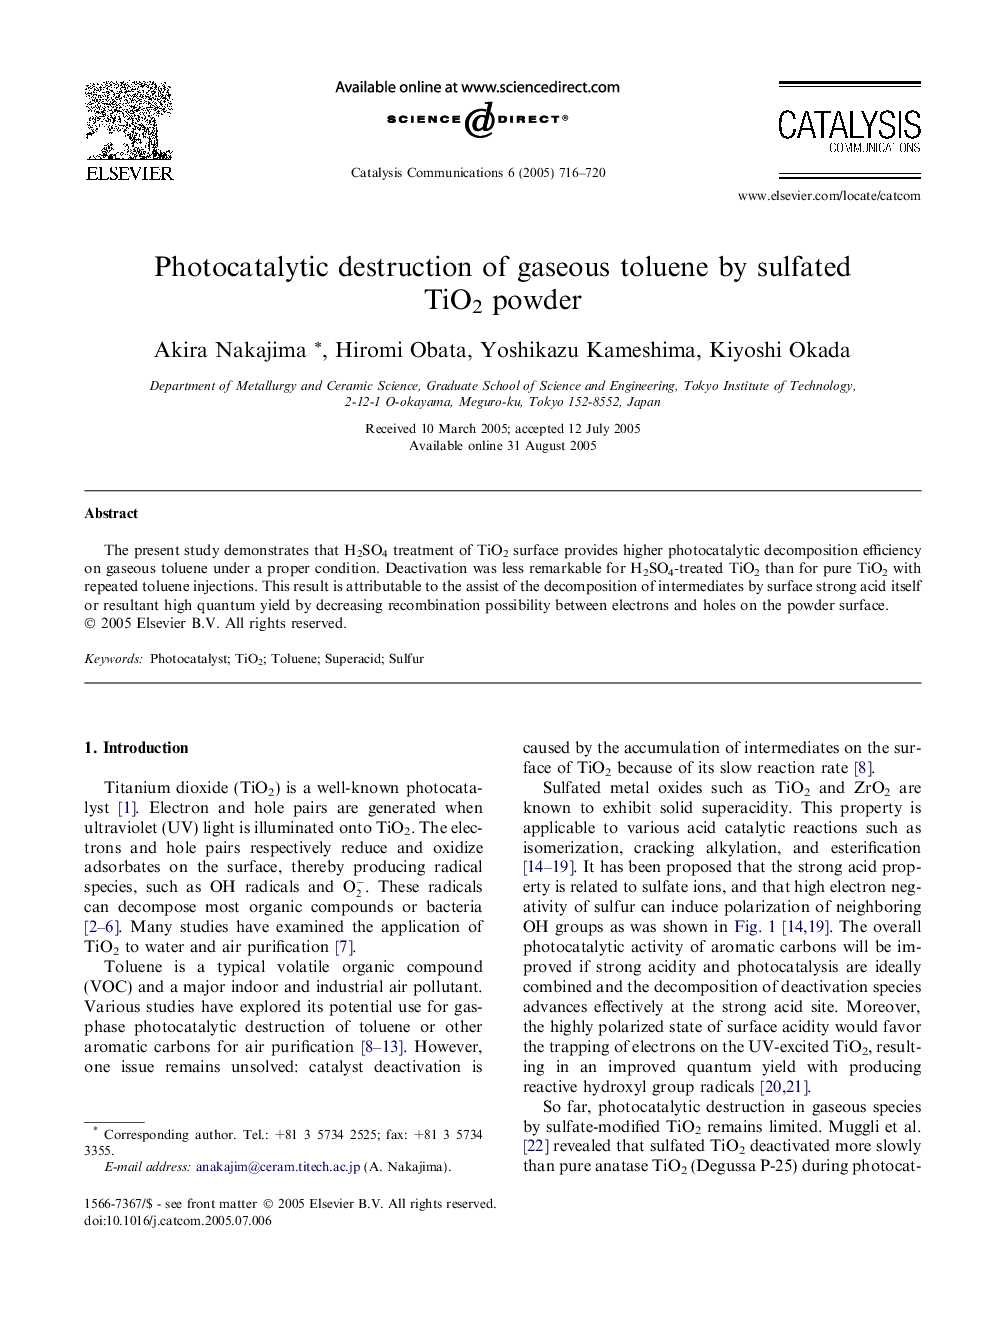 Photocatalytic destruction of gaseous toluene by sulfated TiO2 powder